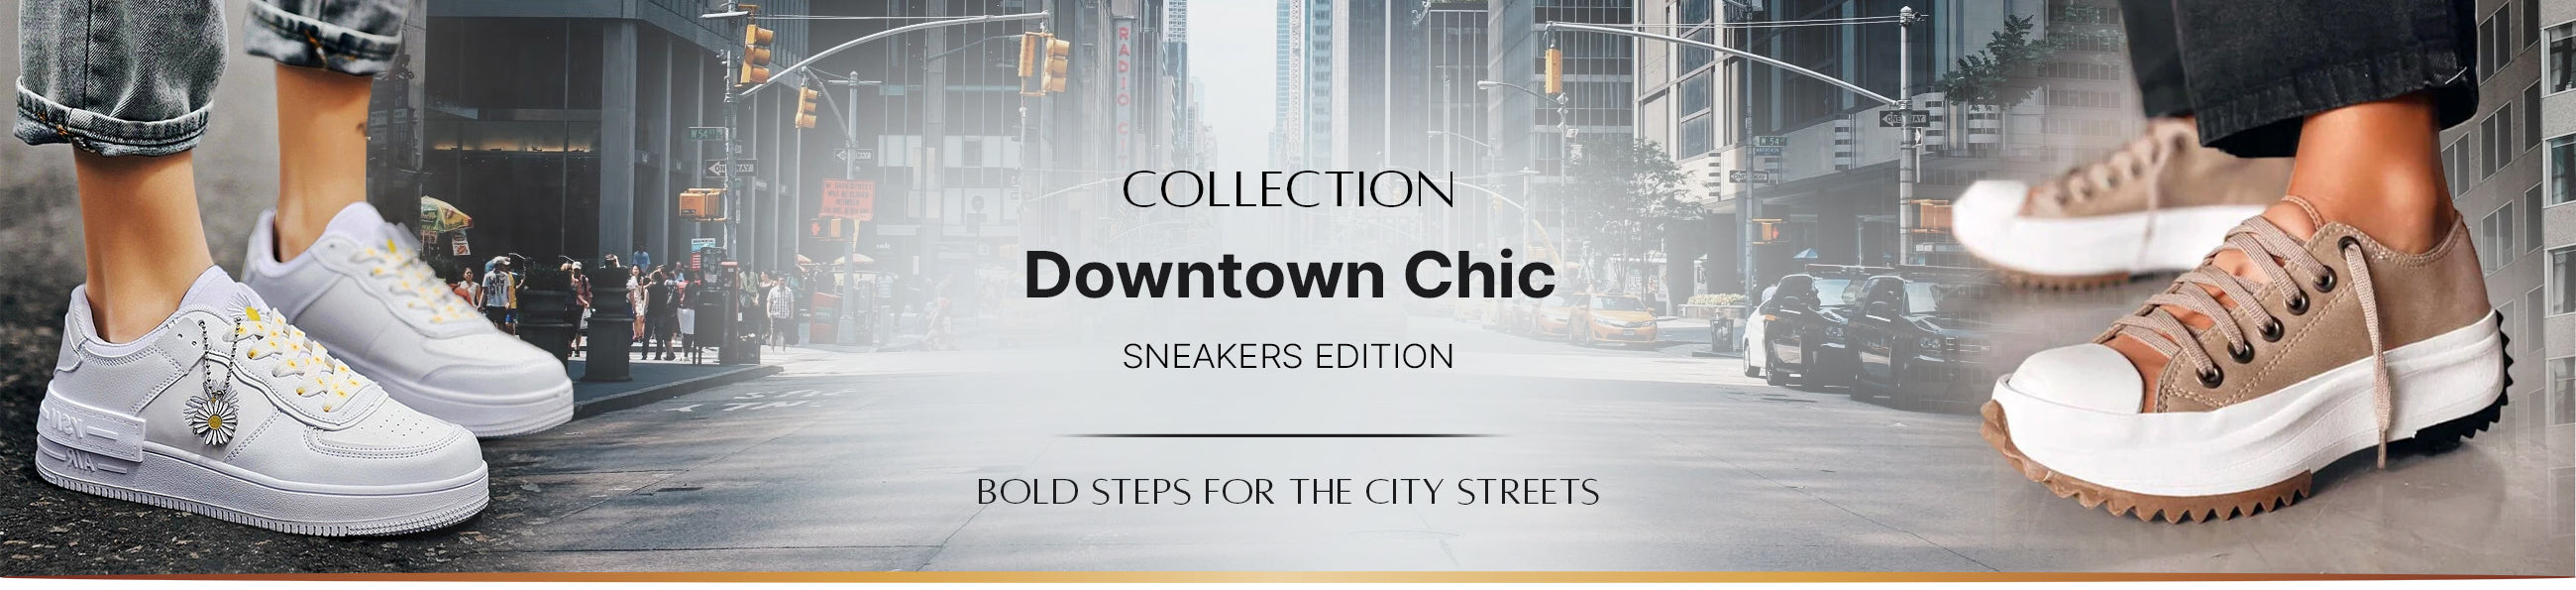 Downtown Chic Sneakers DESKTOP_BANNER.jpg__PID:9d825ade-26cb-4a9e-83dd-95dca1d01e3c